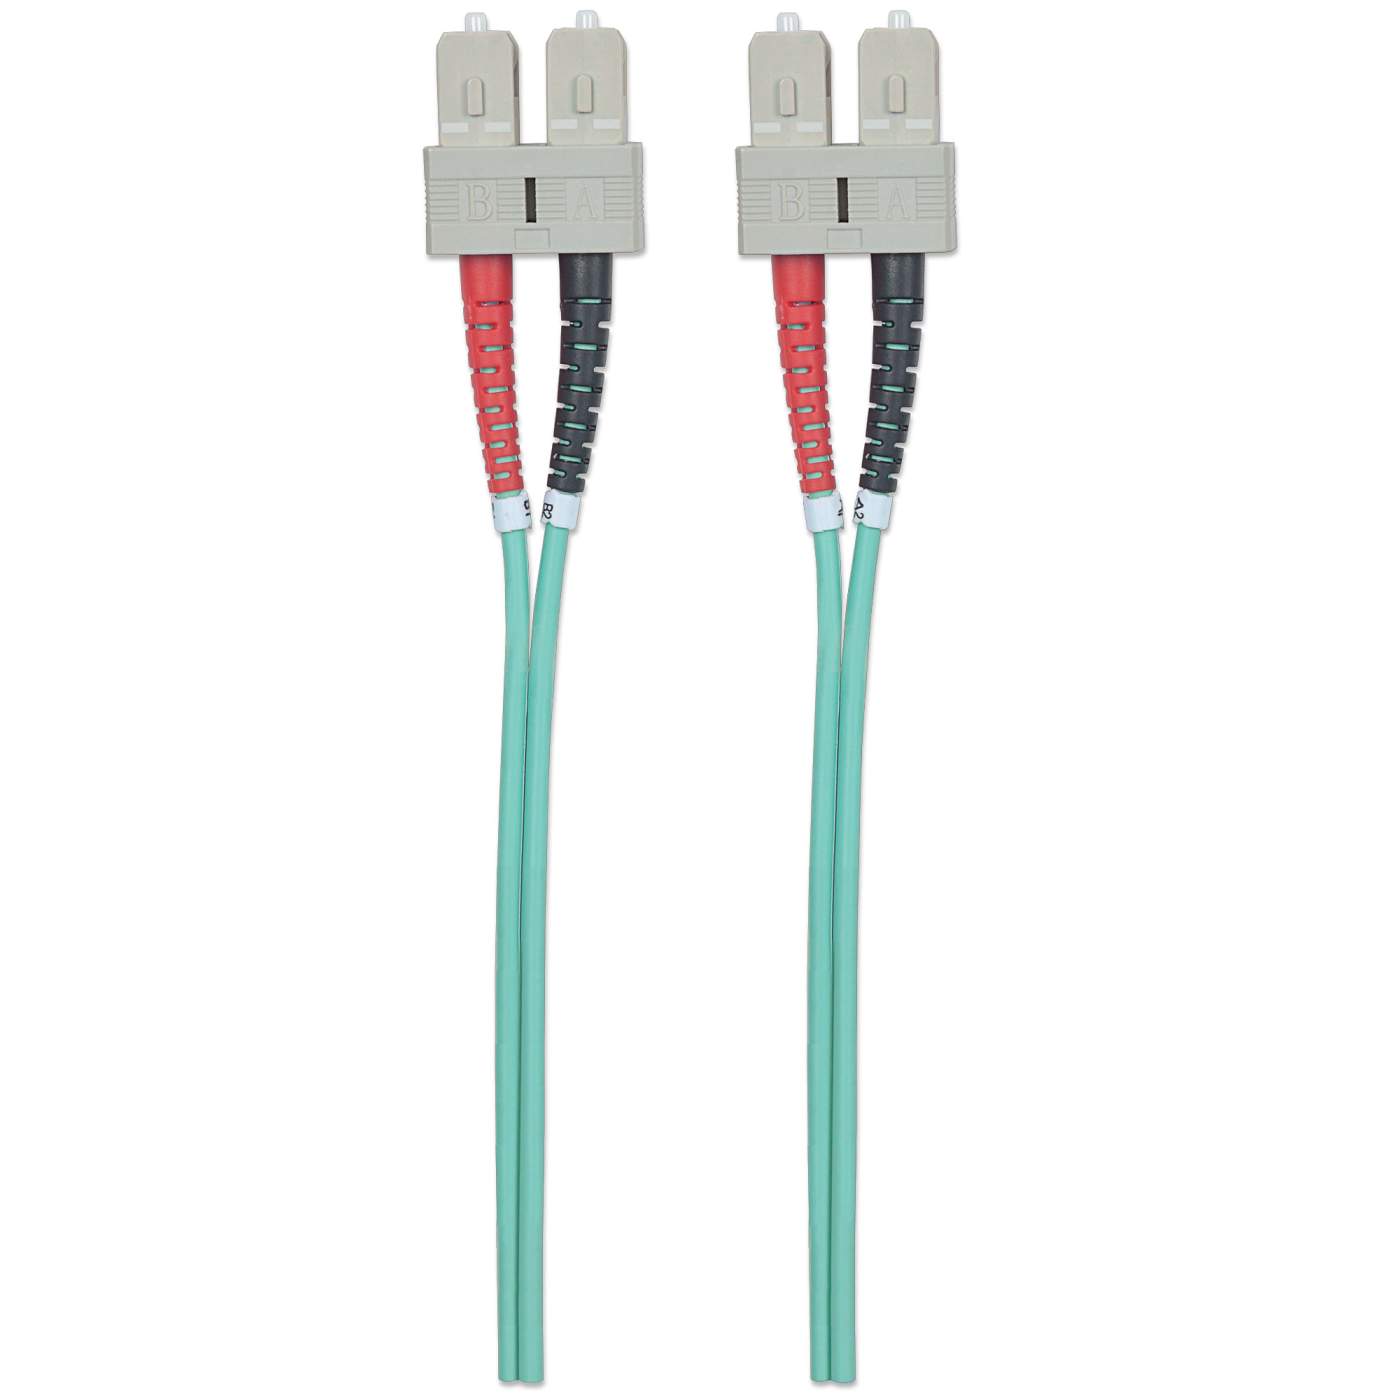 SC/SC Multimode 50/125 OM3 2m Fiber Optics Cable - Fibre Optic